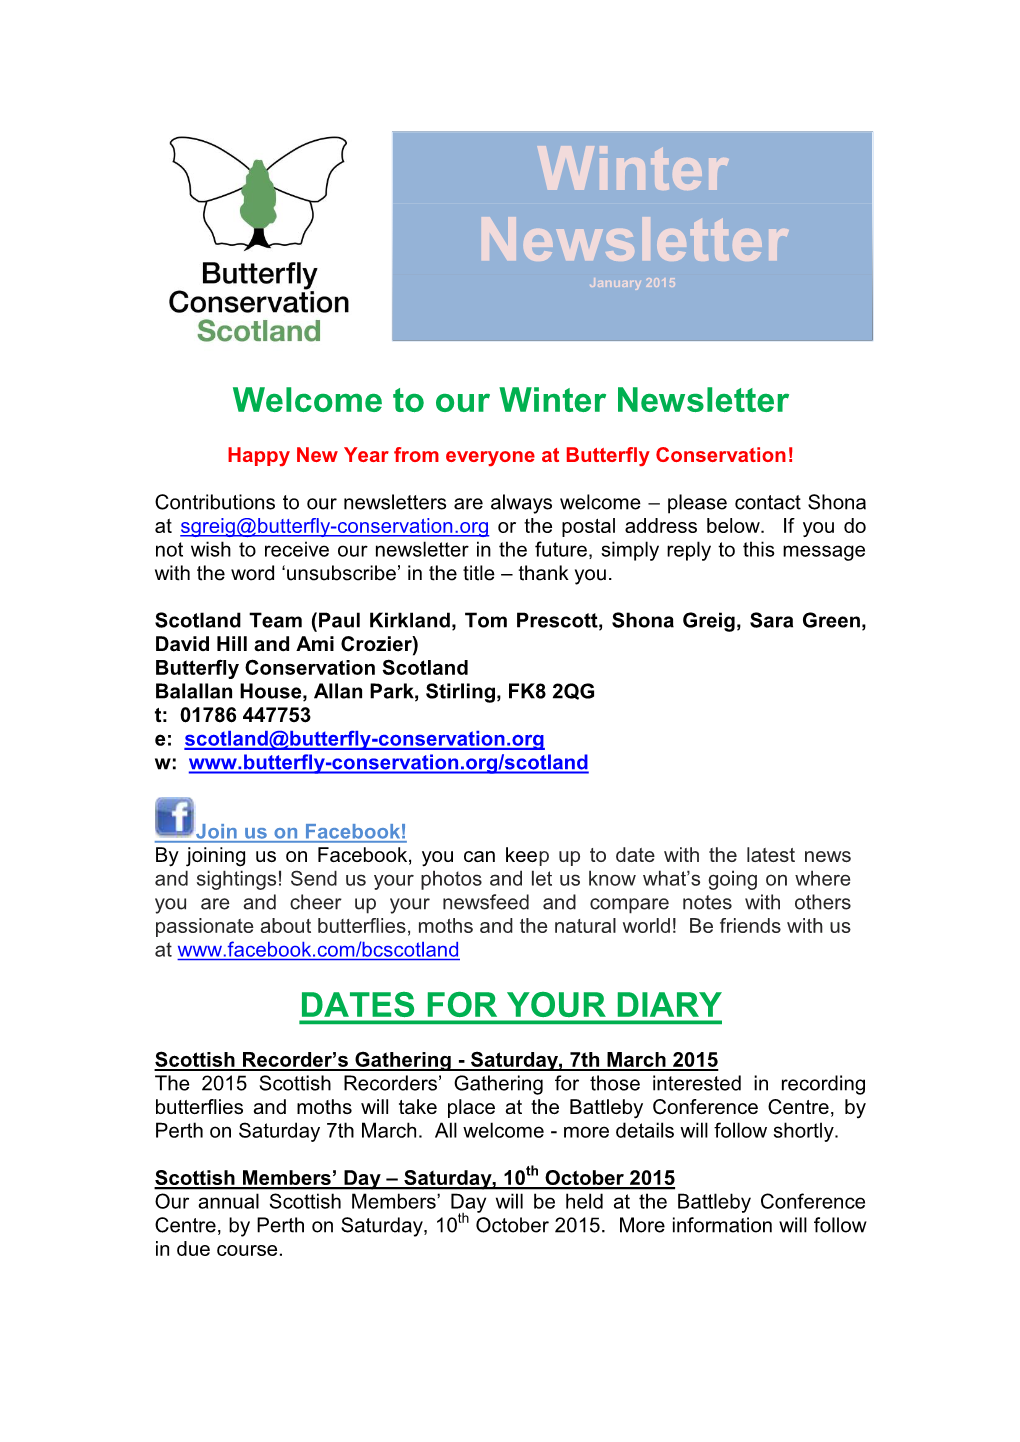 E-News Winter 2014/15